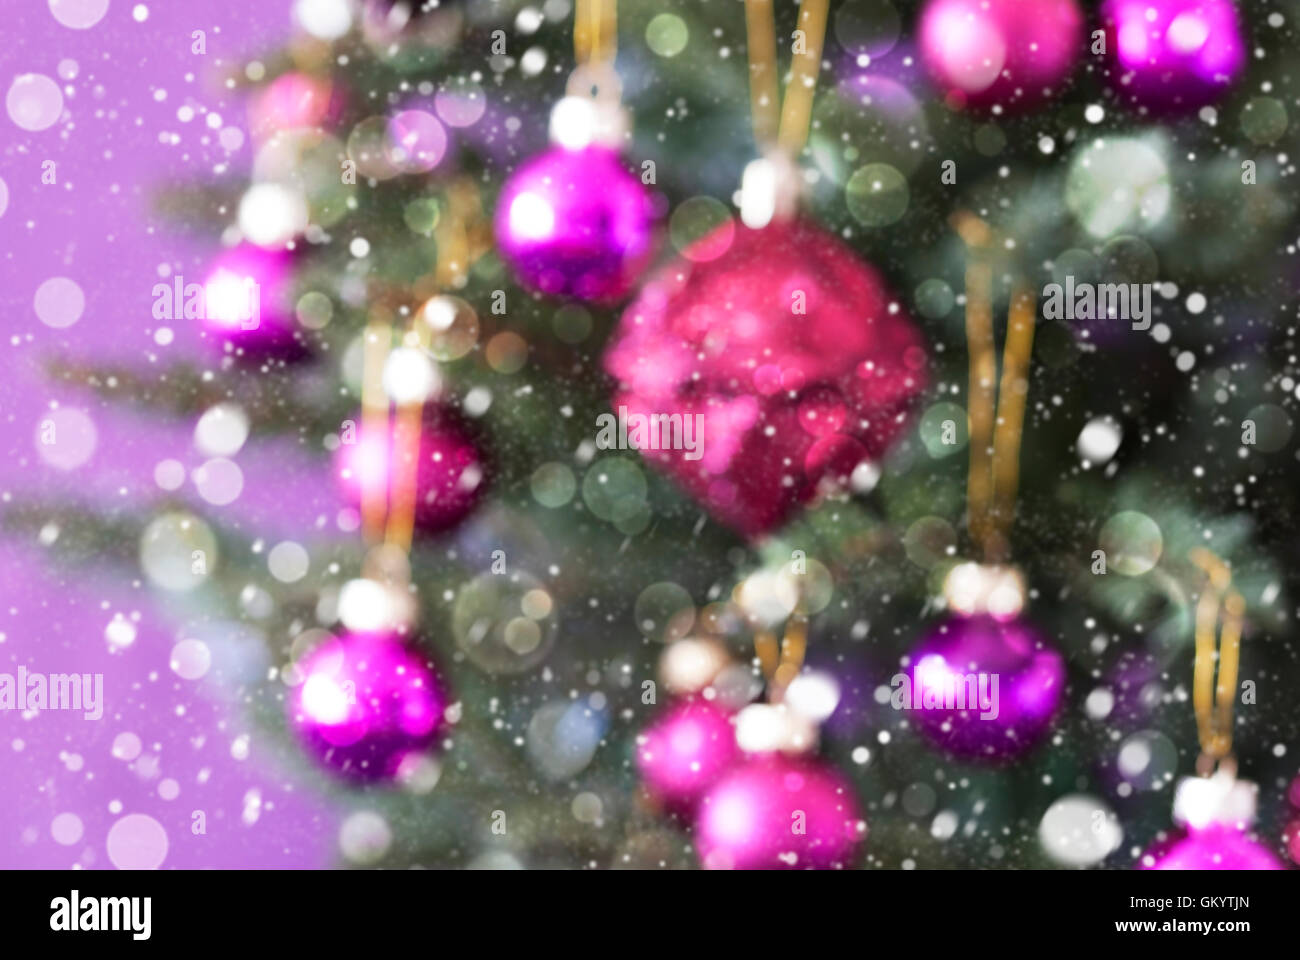 Blurry Christmas Tree With Rose Quartz Balls, Bokeh And Snowflakes Stock Photo